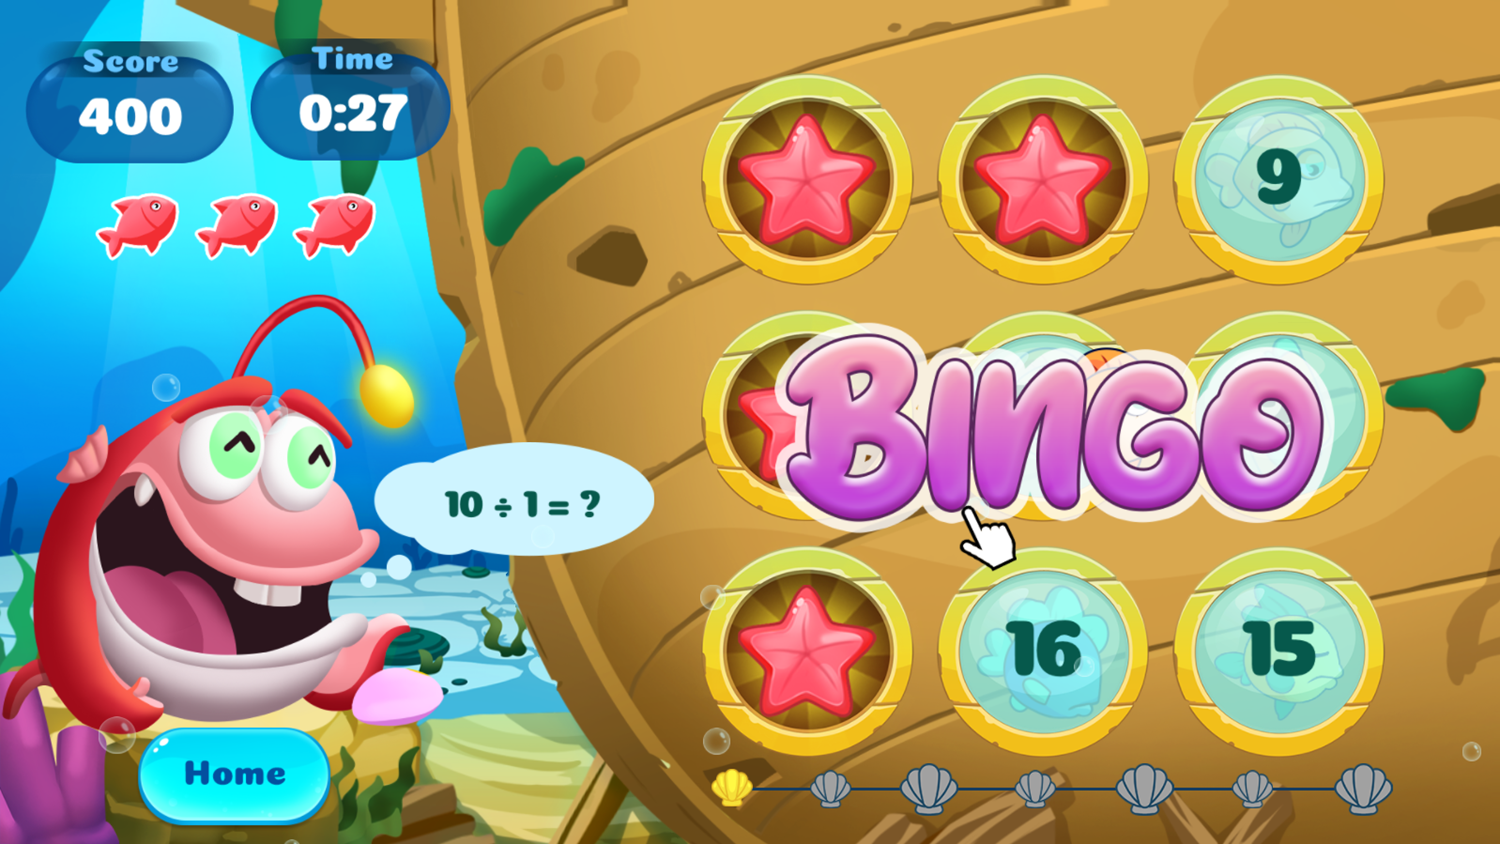 Rescue Me Game Level Bingo Screenshot.